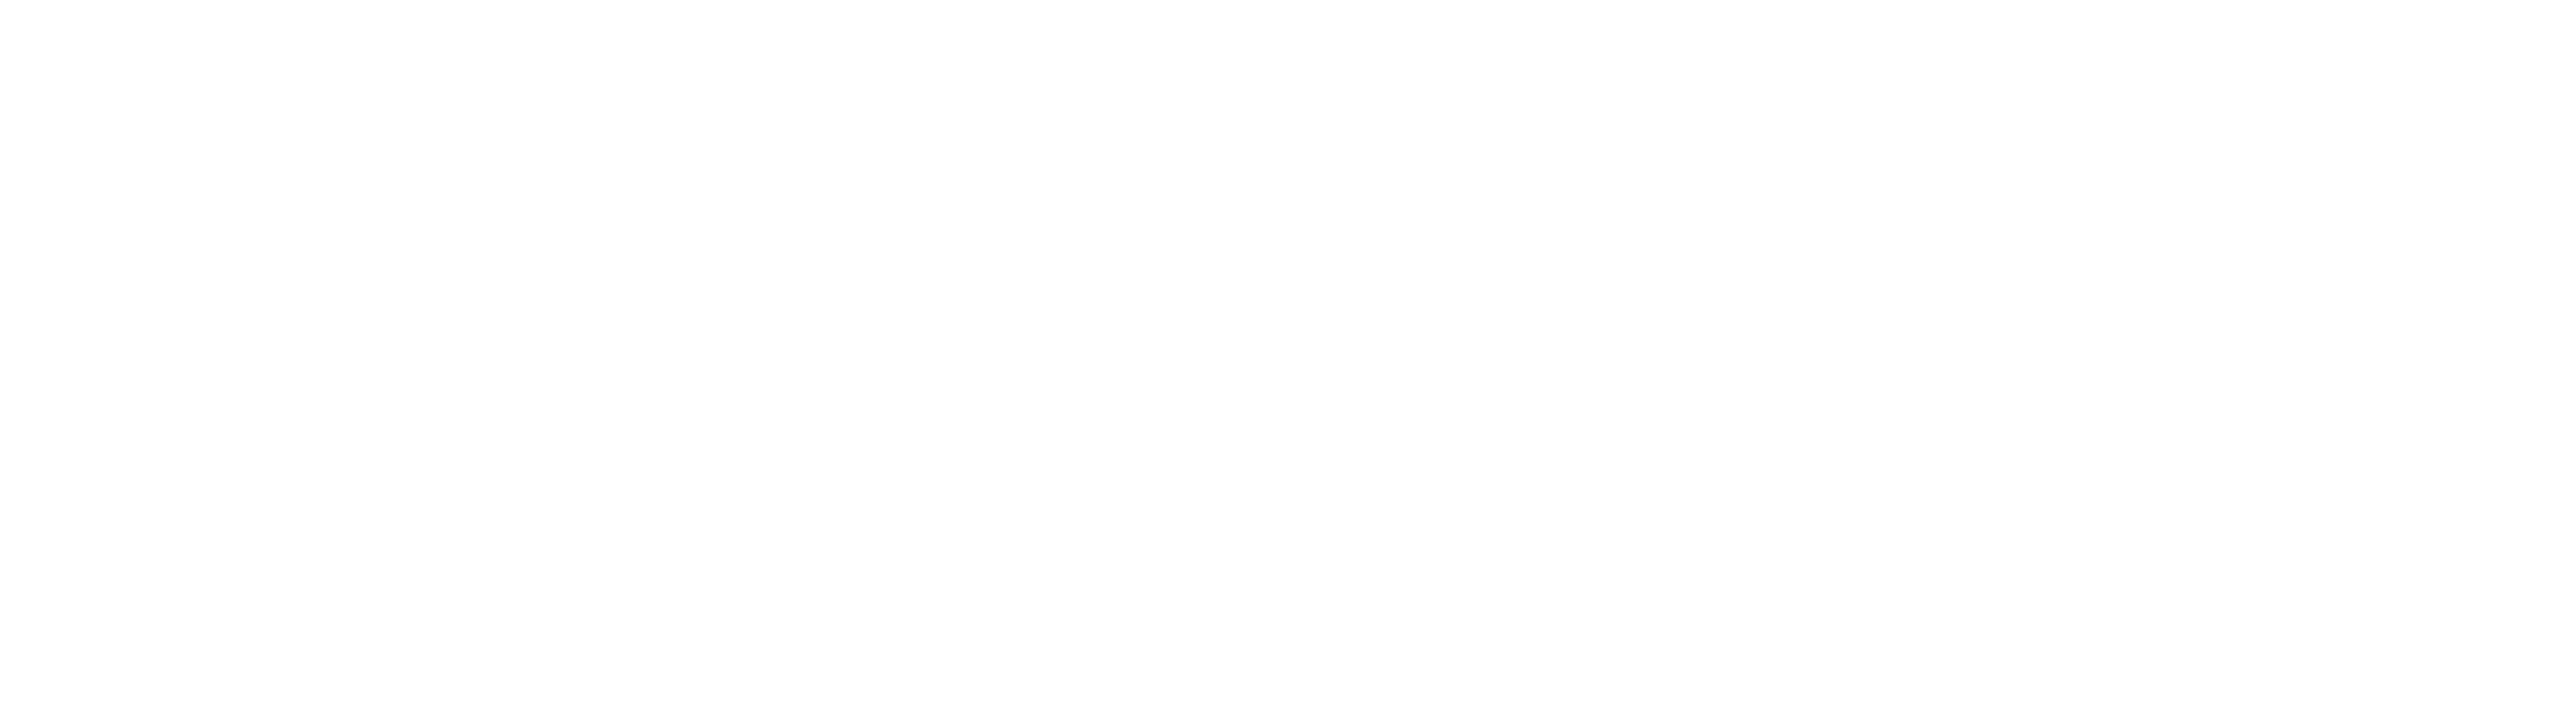 Chemical-bonds-4